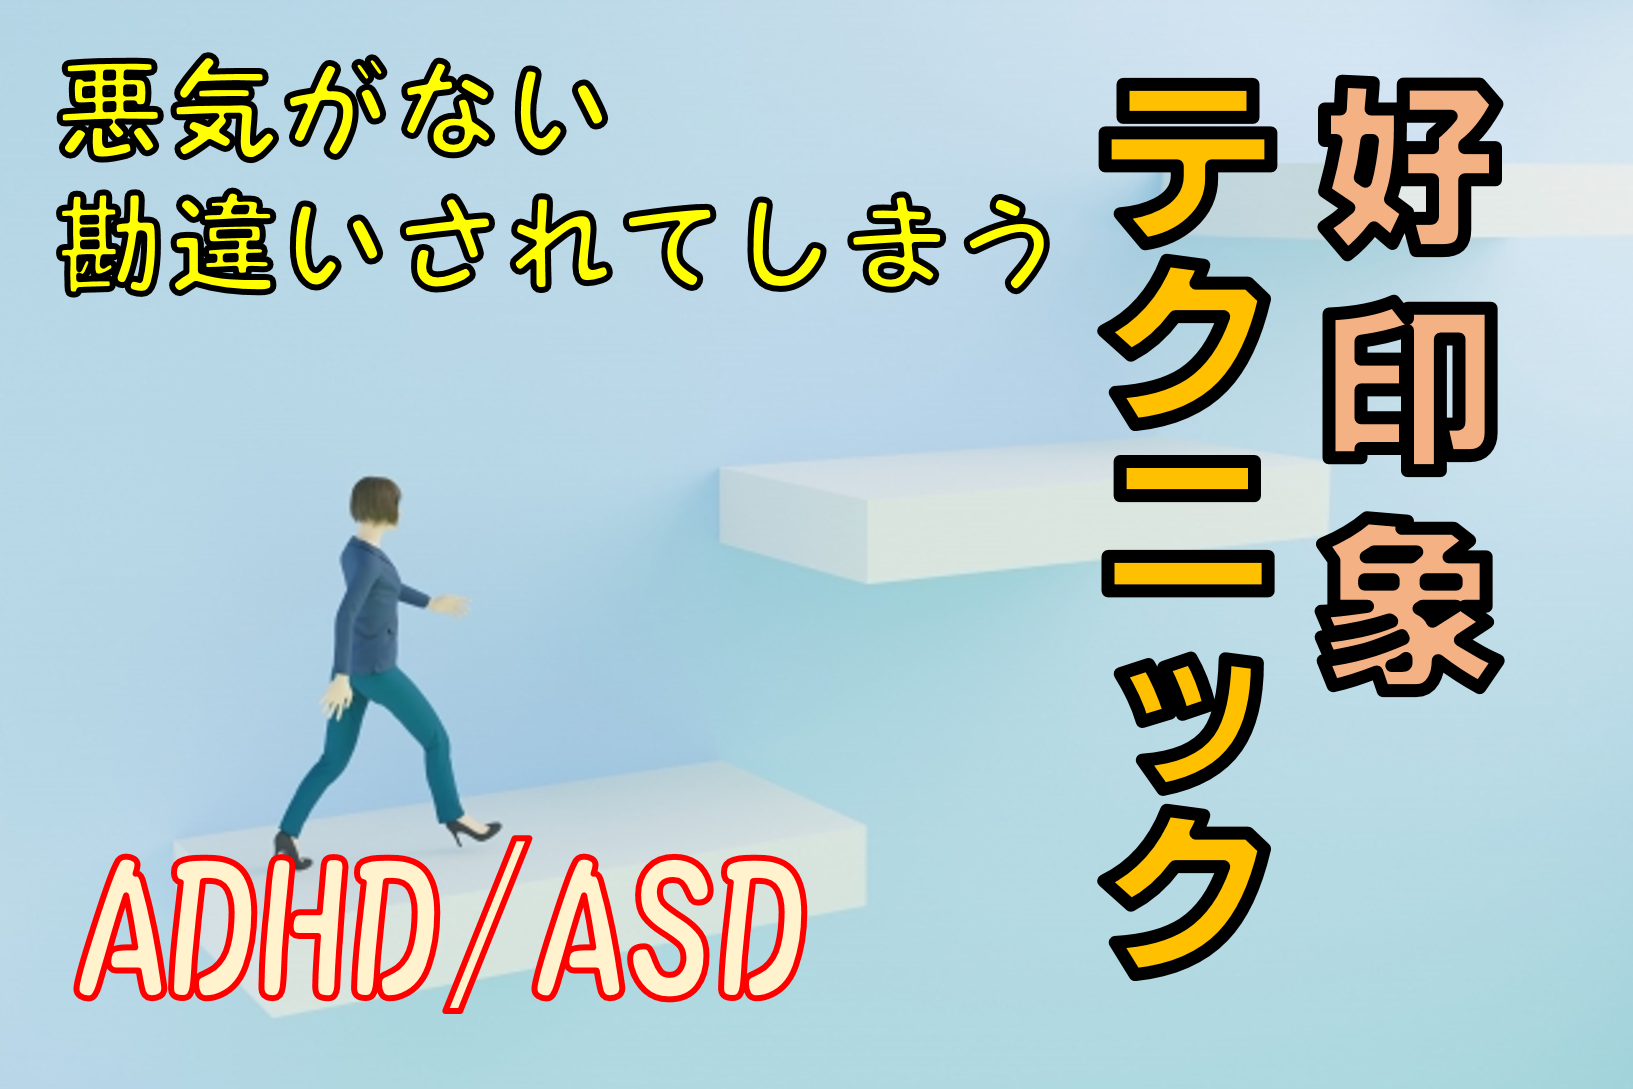 ASD/ADHD好印象テクニック